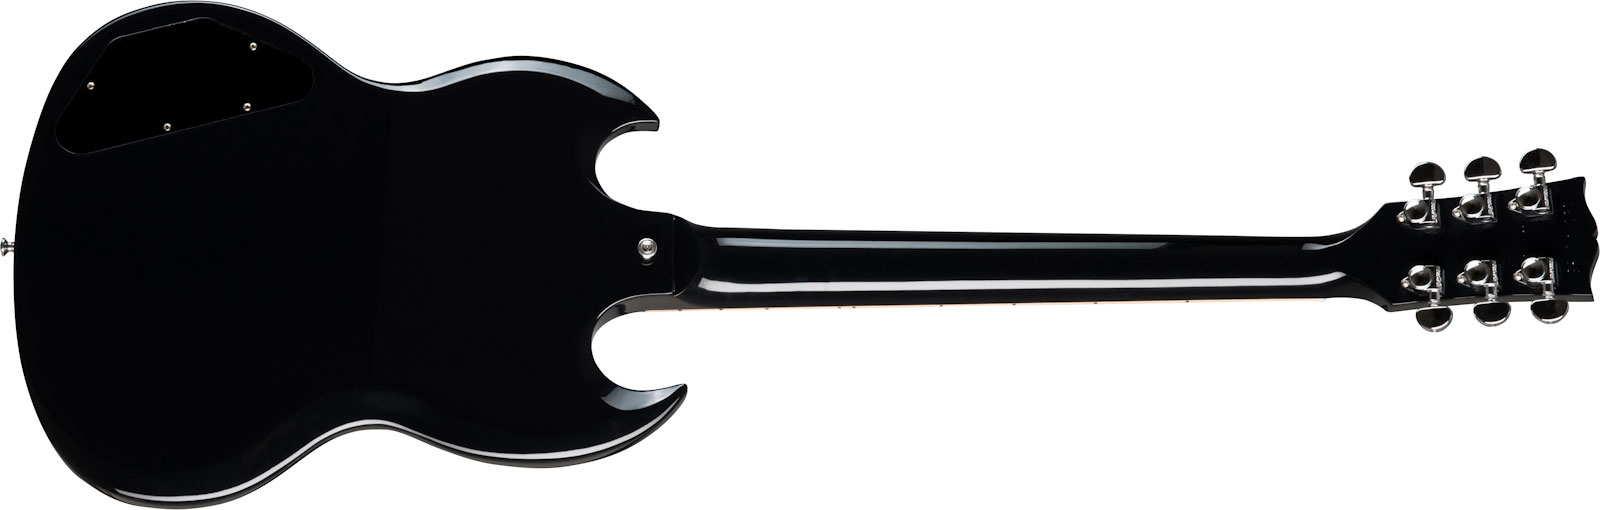 Gibson Sg Standard Lh Gaucher 2h Ht Rw - Ebony - Left-handed electric guitar - Variation 1